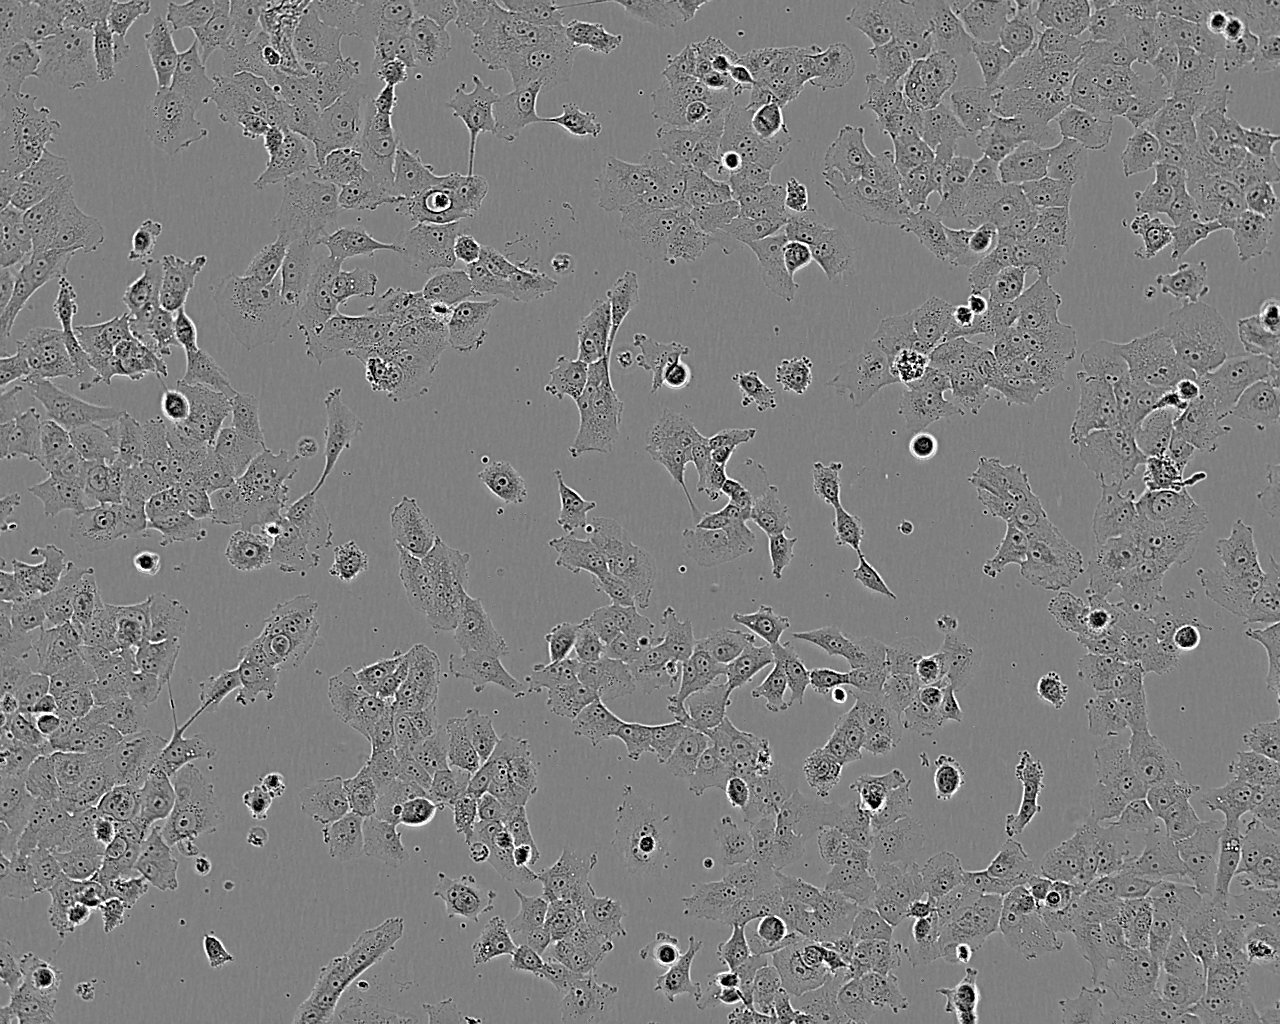 NCI-H2052 epithelioid cells人恶性胸膜间皮瘤细胞系,NCI-H2052 epithelioid cells